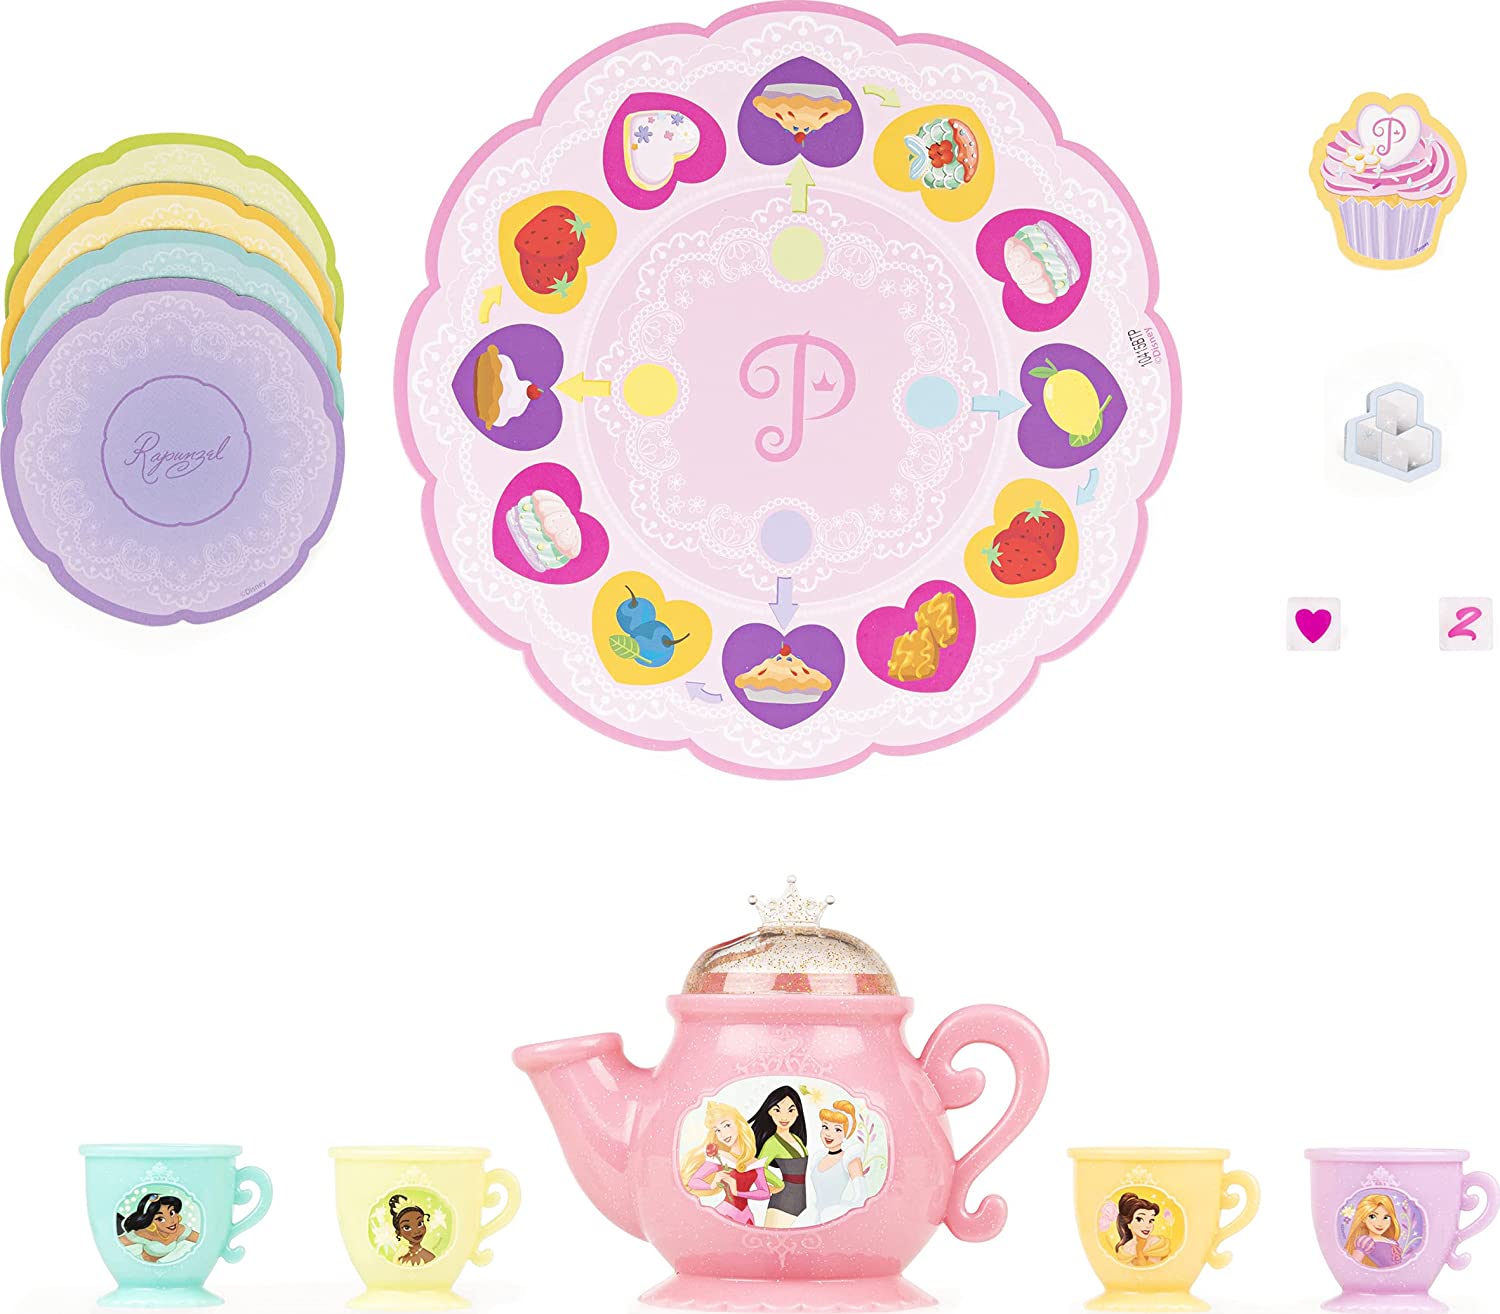 Disney Princess Treats & Sweets Party Game